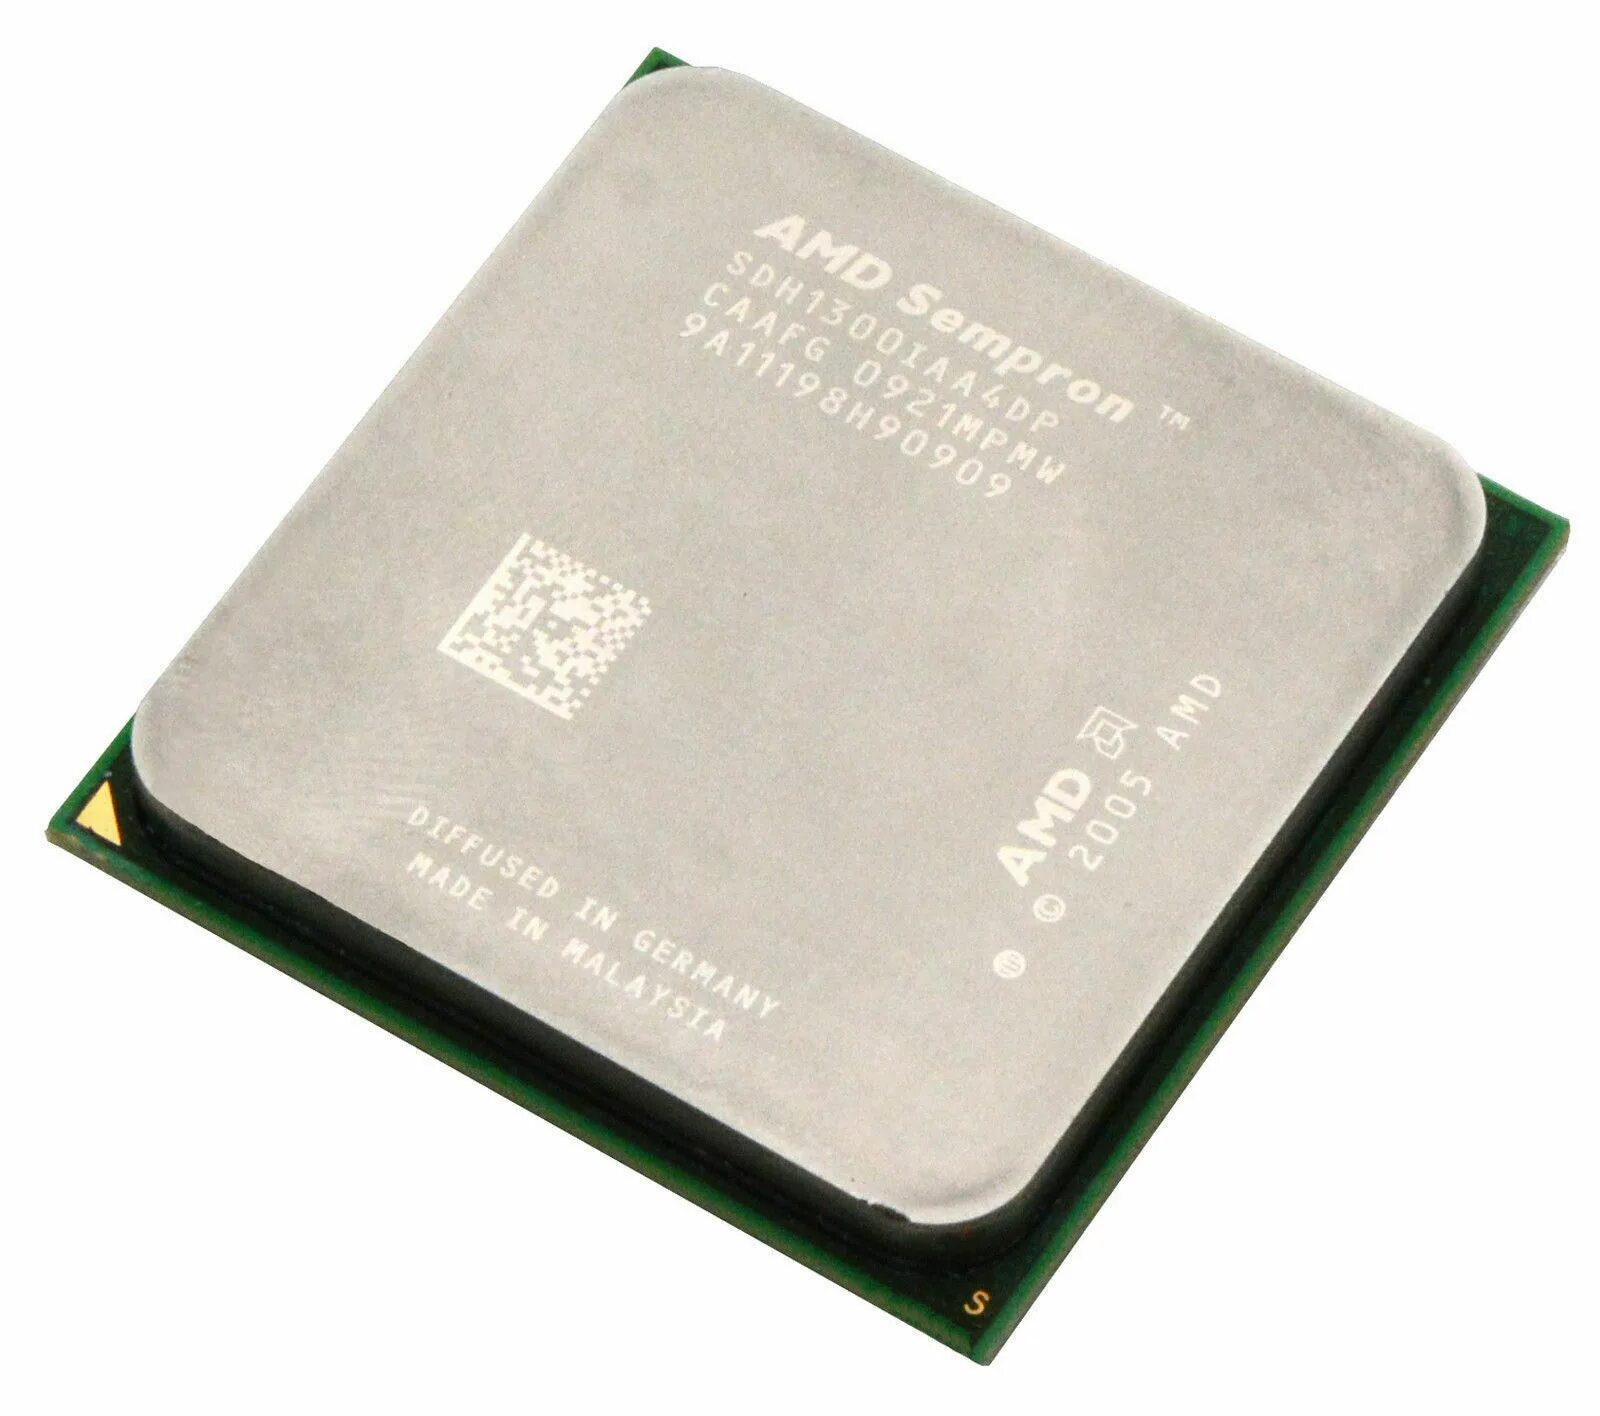 1x AMD Sempron Processor le-1300. AMD Sempron sdx145hbk13gm. Sempron le-1300 (dp),512k,Rev.g2,45w,socketam2. Процессор 64 бит.